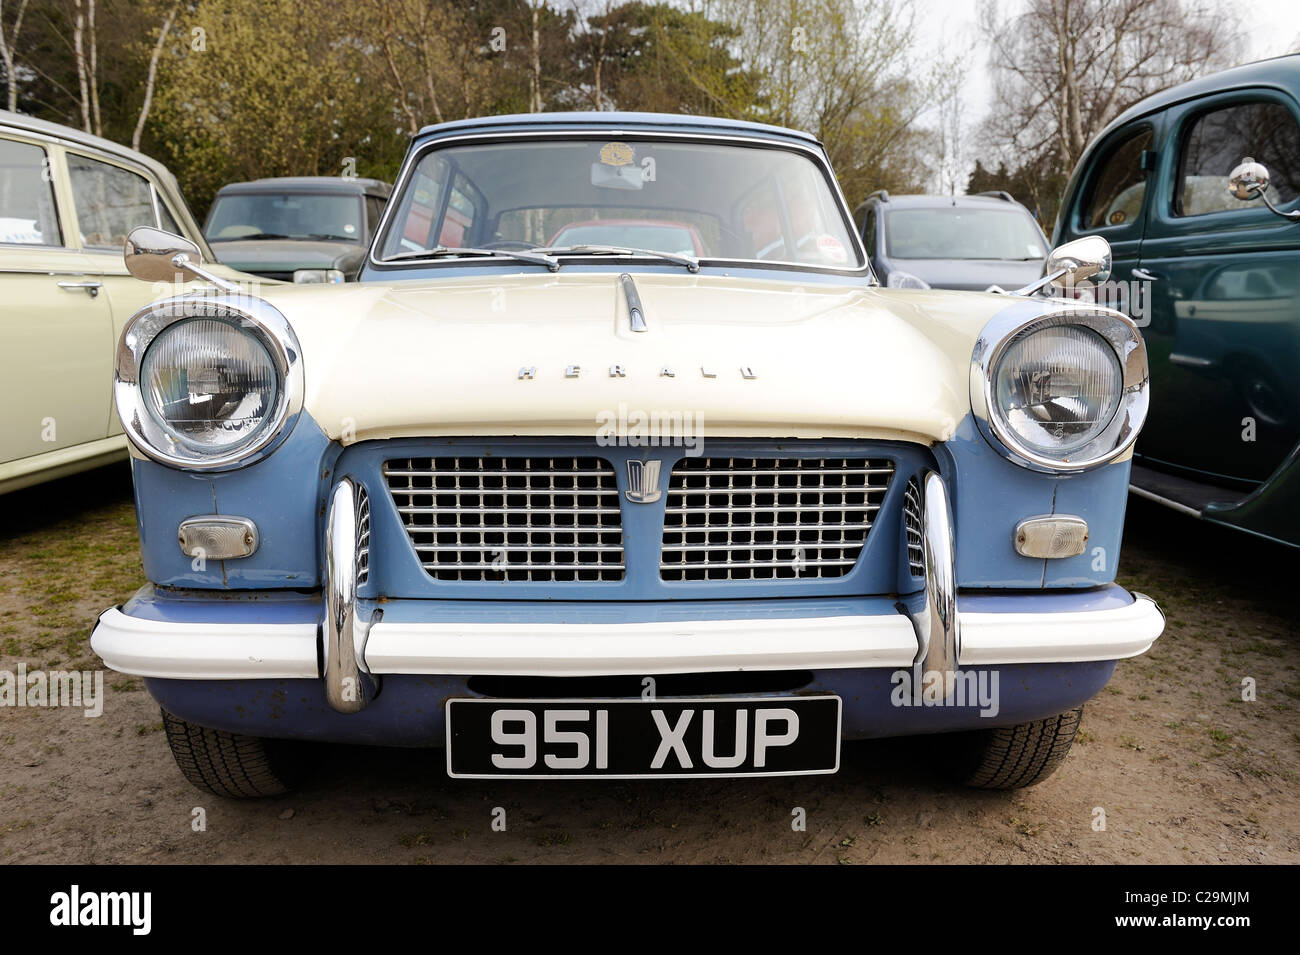 triumph herald 1200 classic car england uk Stock Photo